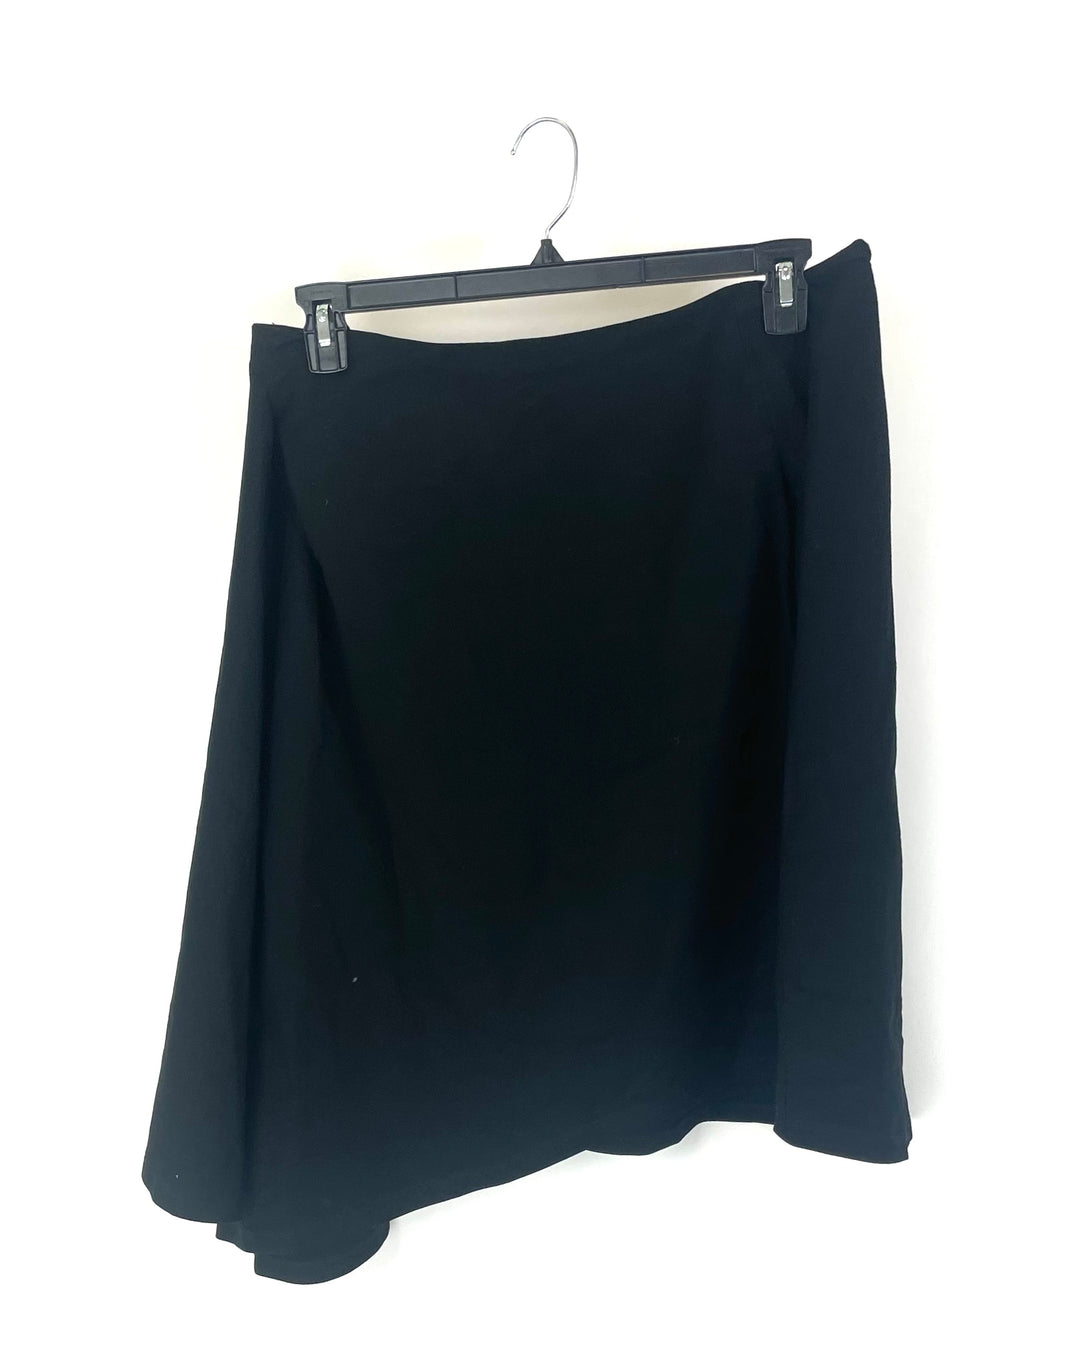 Black Asymmetrical Skirt - Size 14, 16,18 and 20